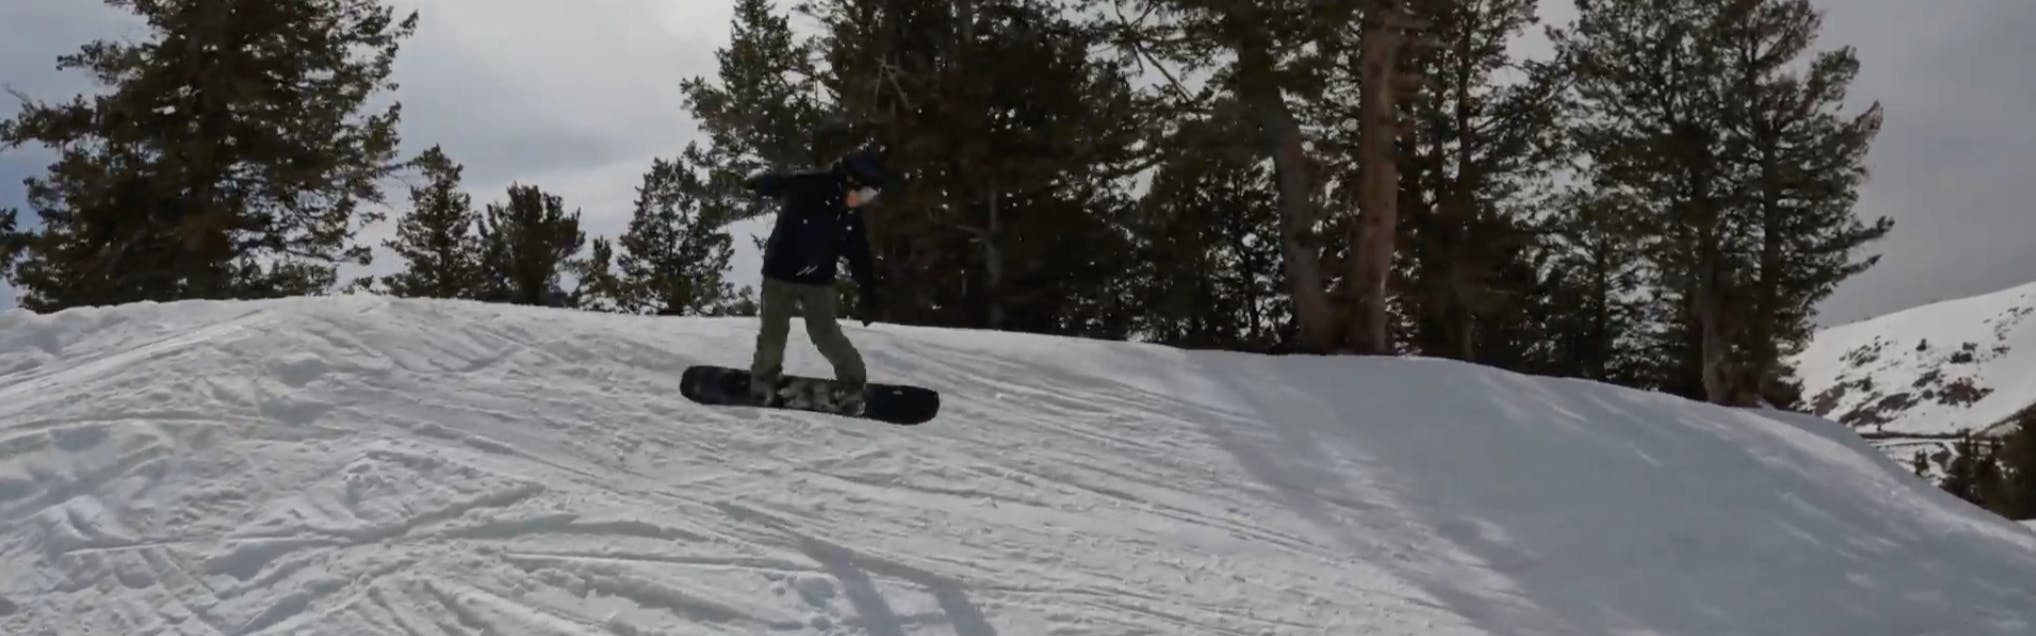 Snowboard Expert Everett Pelkey jumping with the 2023 Arbor Bryan Iguchi Pro snowboard